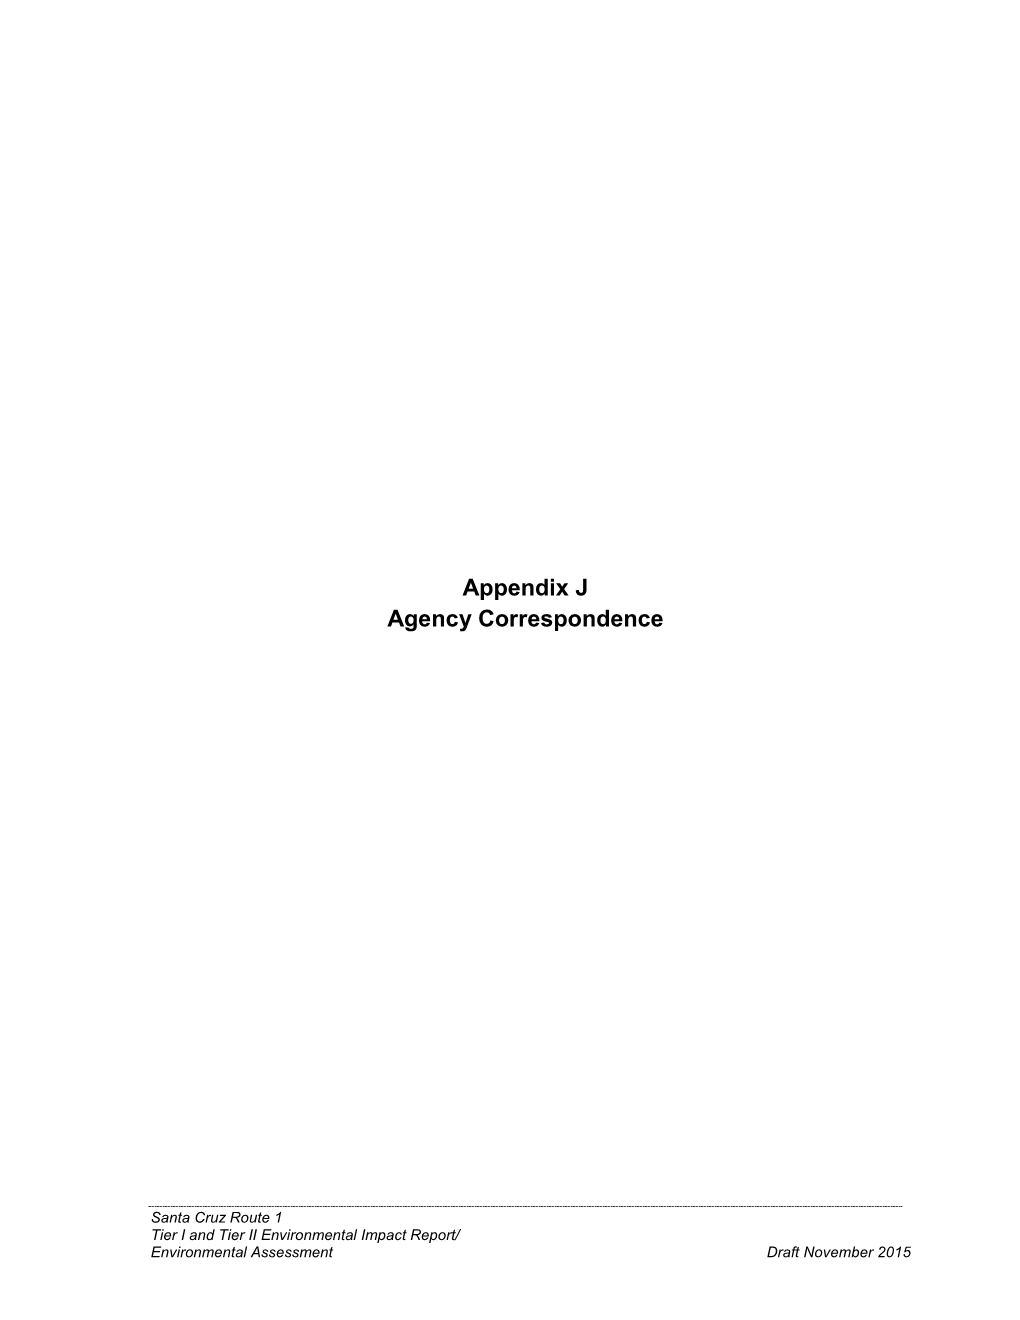 Appendix J Agency Correspondence